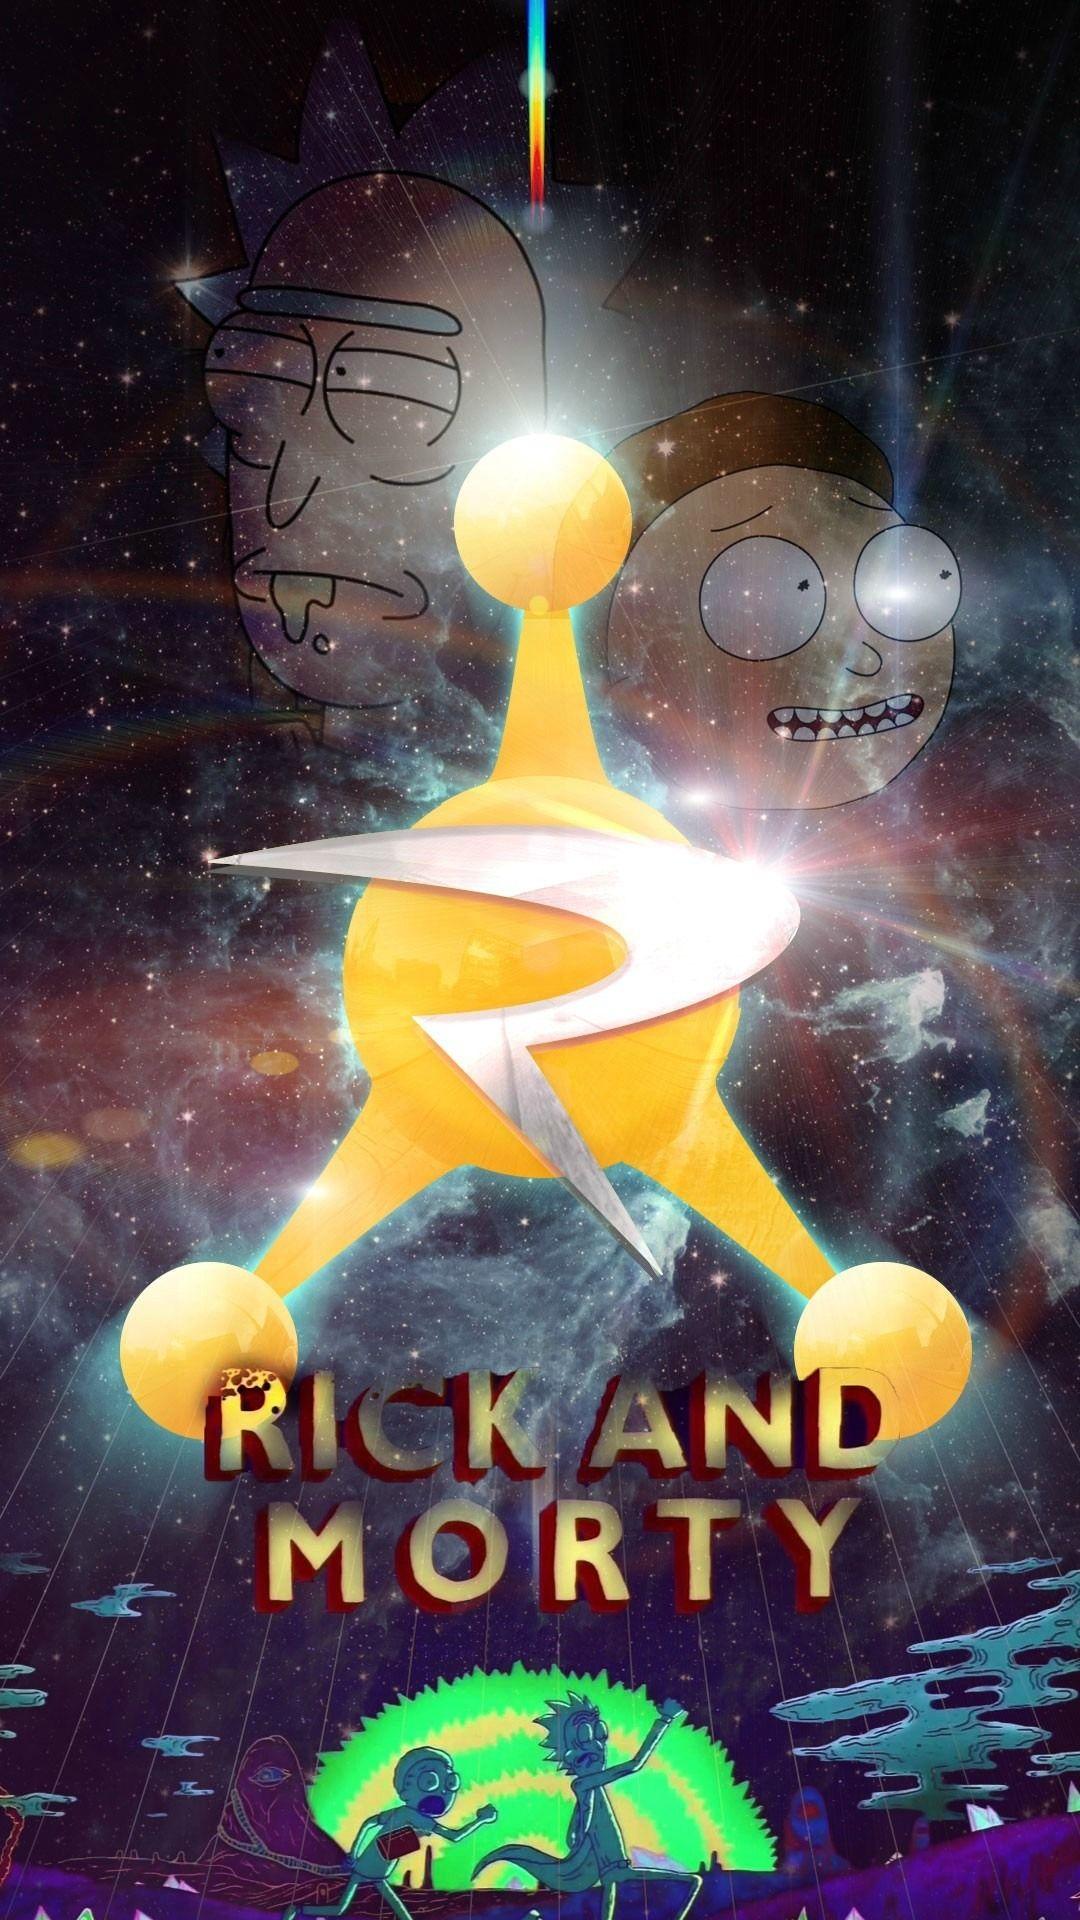 Rick & Morty hashtag Image on Tumblr